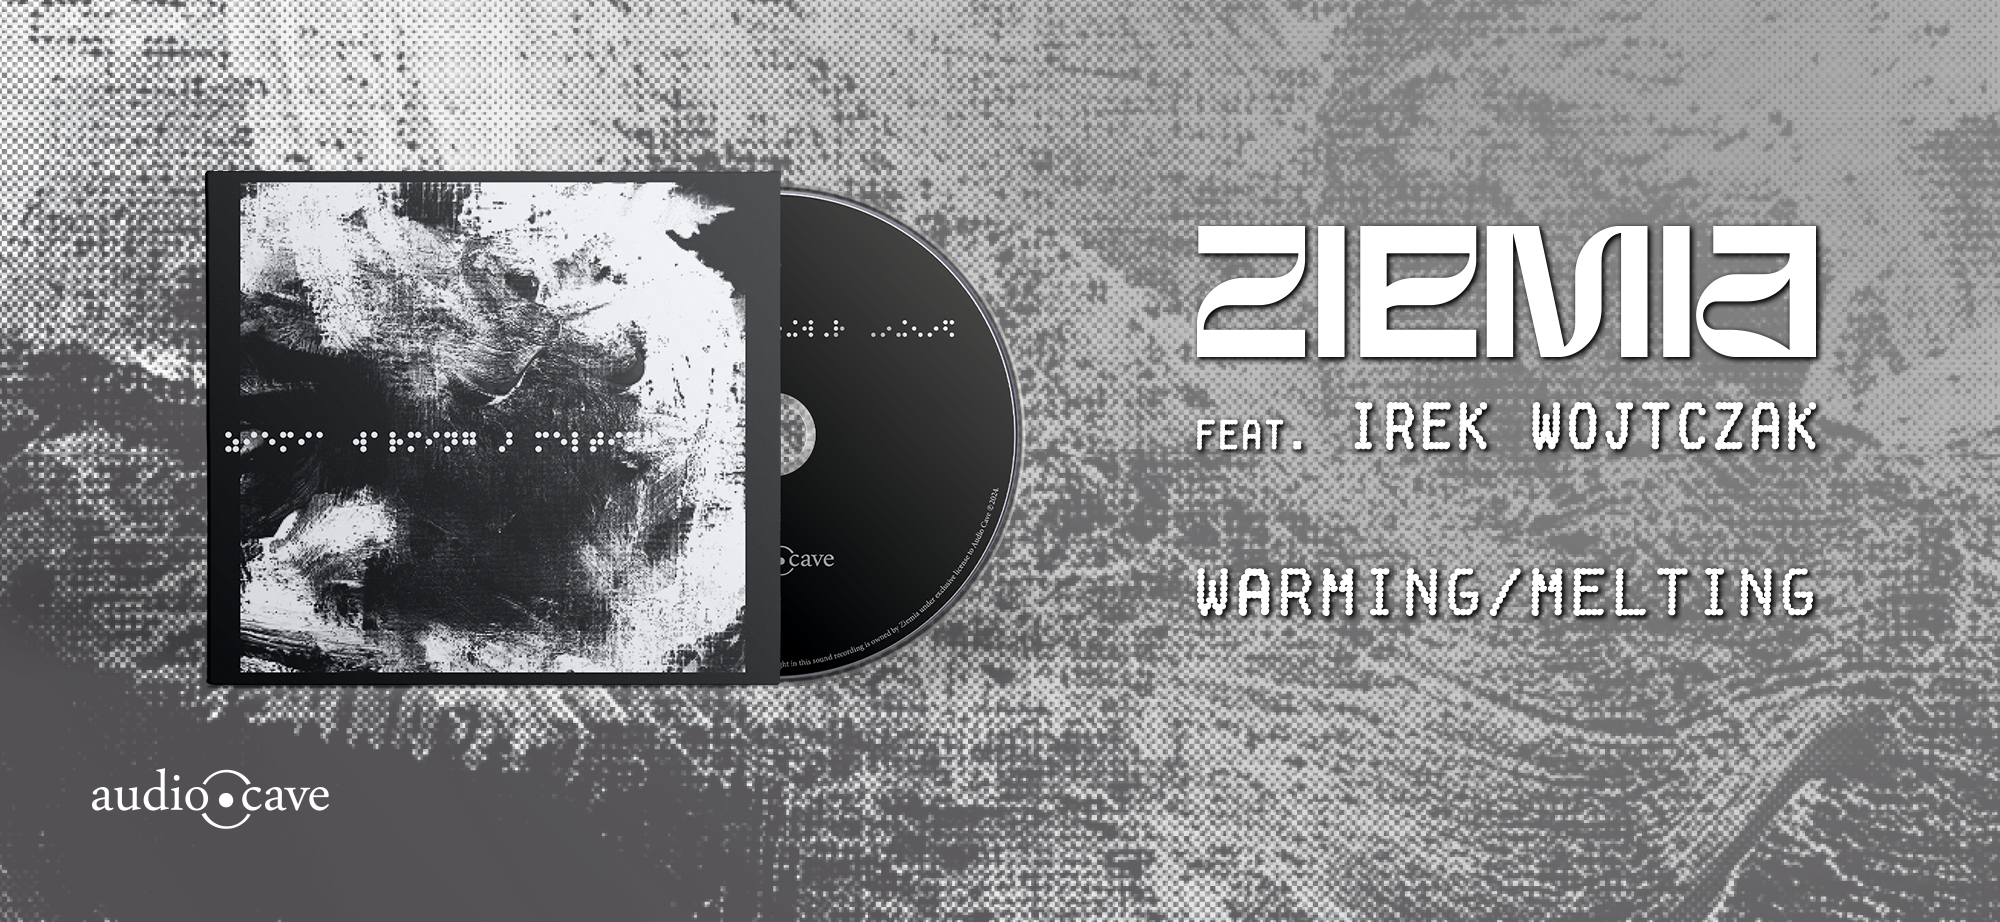 Ziemia feat. Irek Wojtczak - Warming/Melting CD